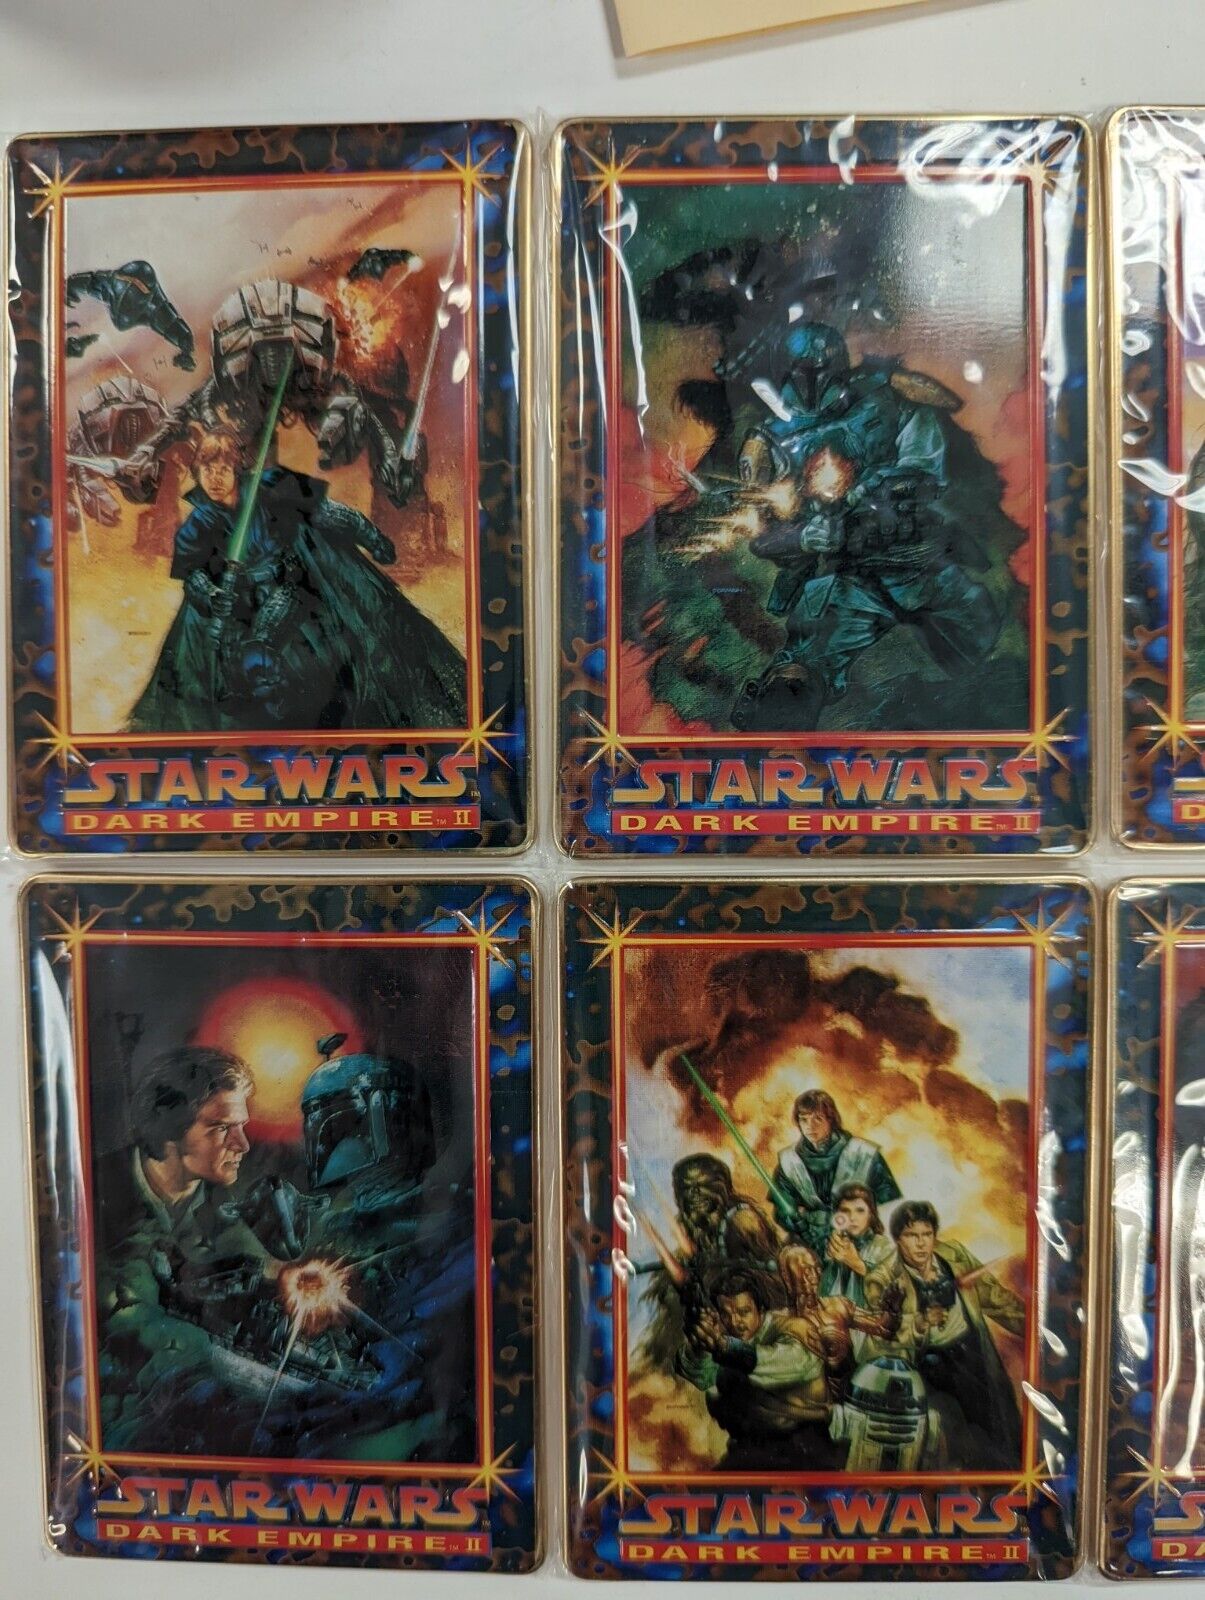 Star Wars Dark Empire II Embossed Metal Collector Cards Metallic Impressions